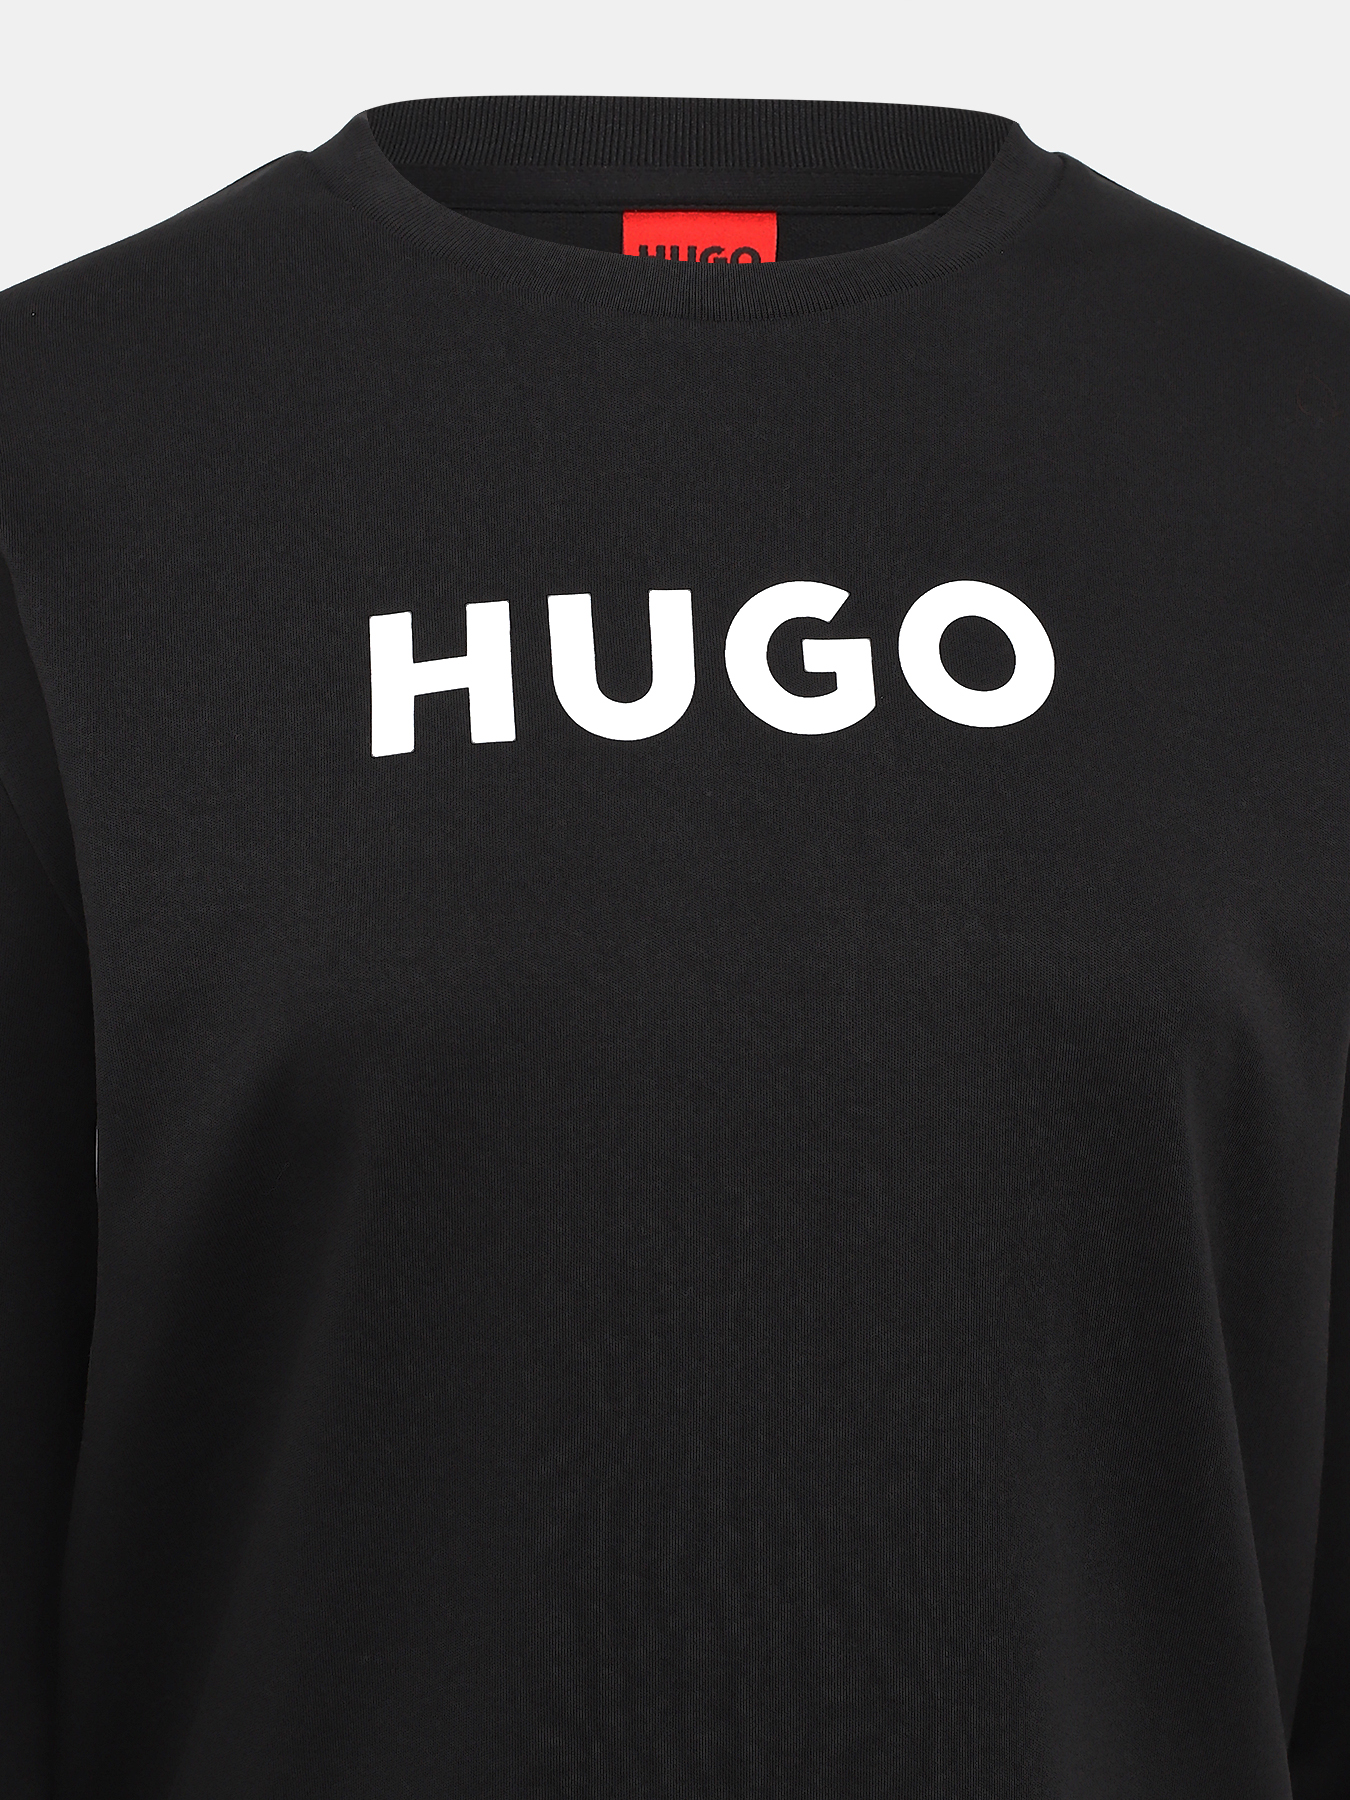 Свитшот The Hugo HUGO 429386-045 Фото 2